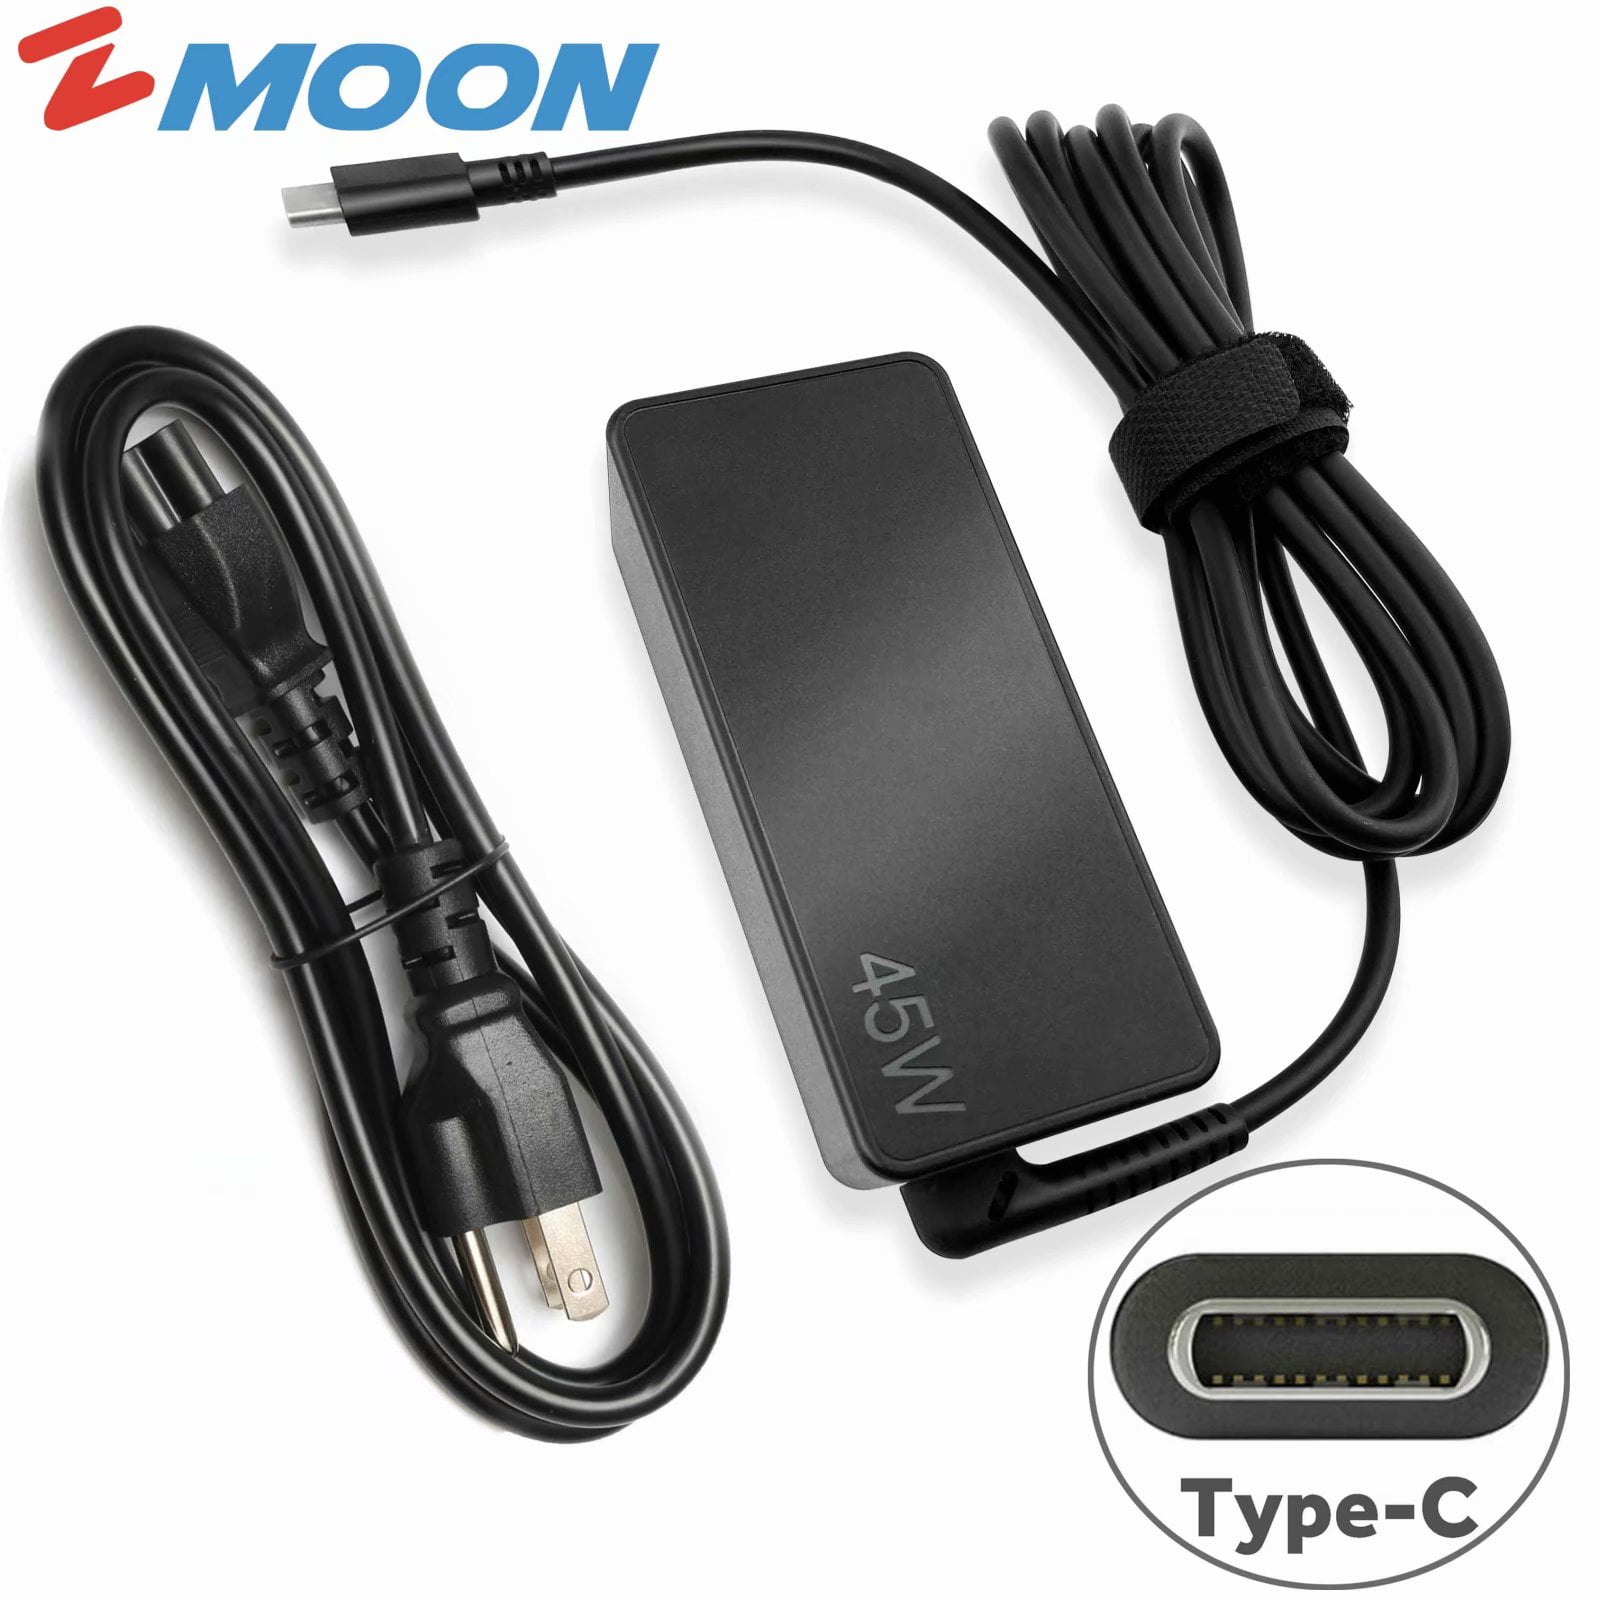 Zmoon Spare Lenovo 45W USB-C Power Adapter for Yoga C630, Yoga 910-13, Yoga 720-13, Miix IdeaPad 720s-13, Chromebook S330 and C330, GX20N20876 - Walmart.com